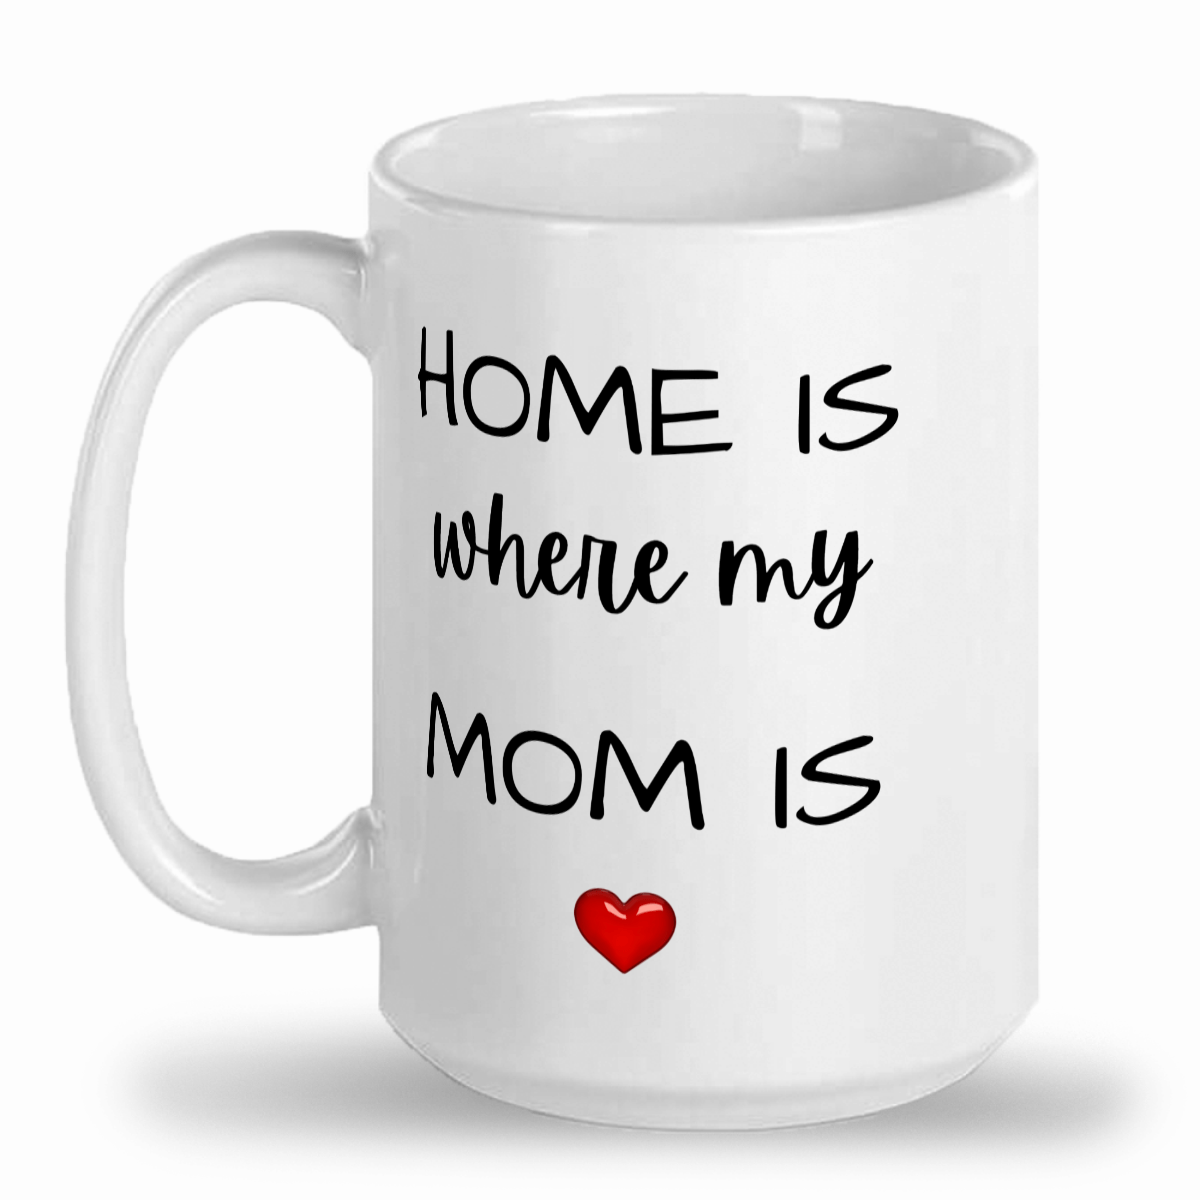 Home is where my Mom is - 15oz mug